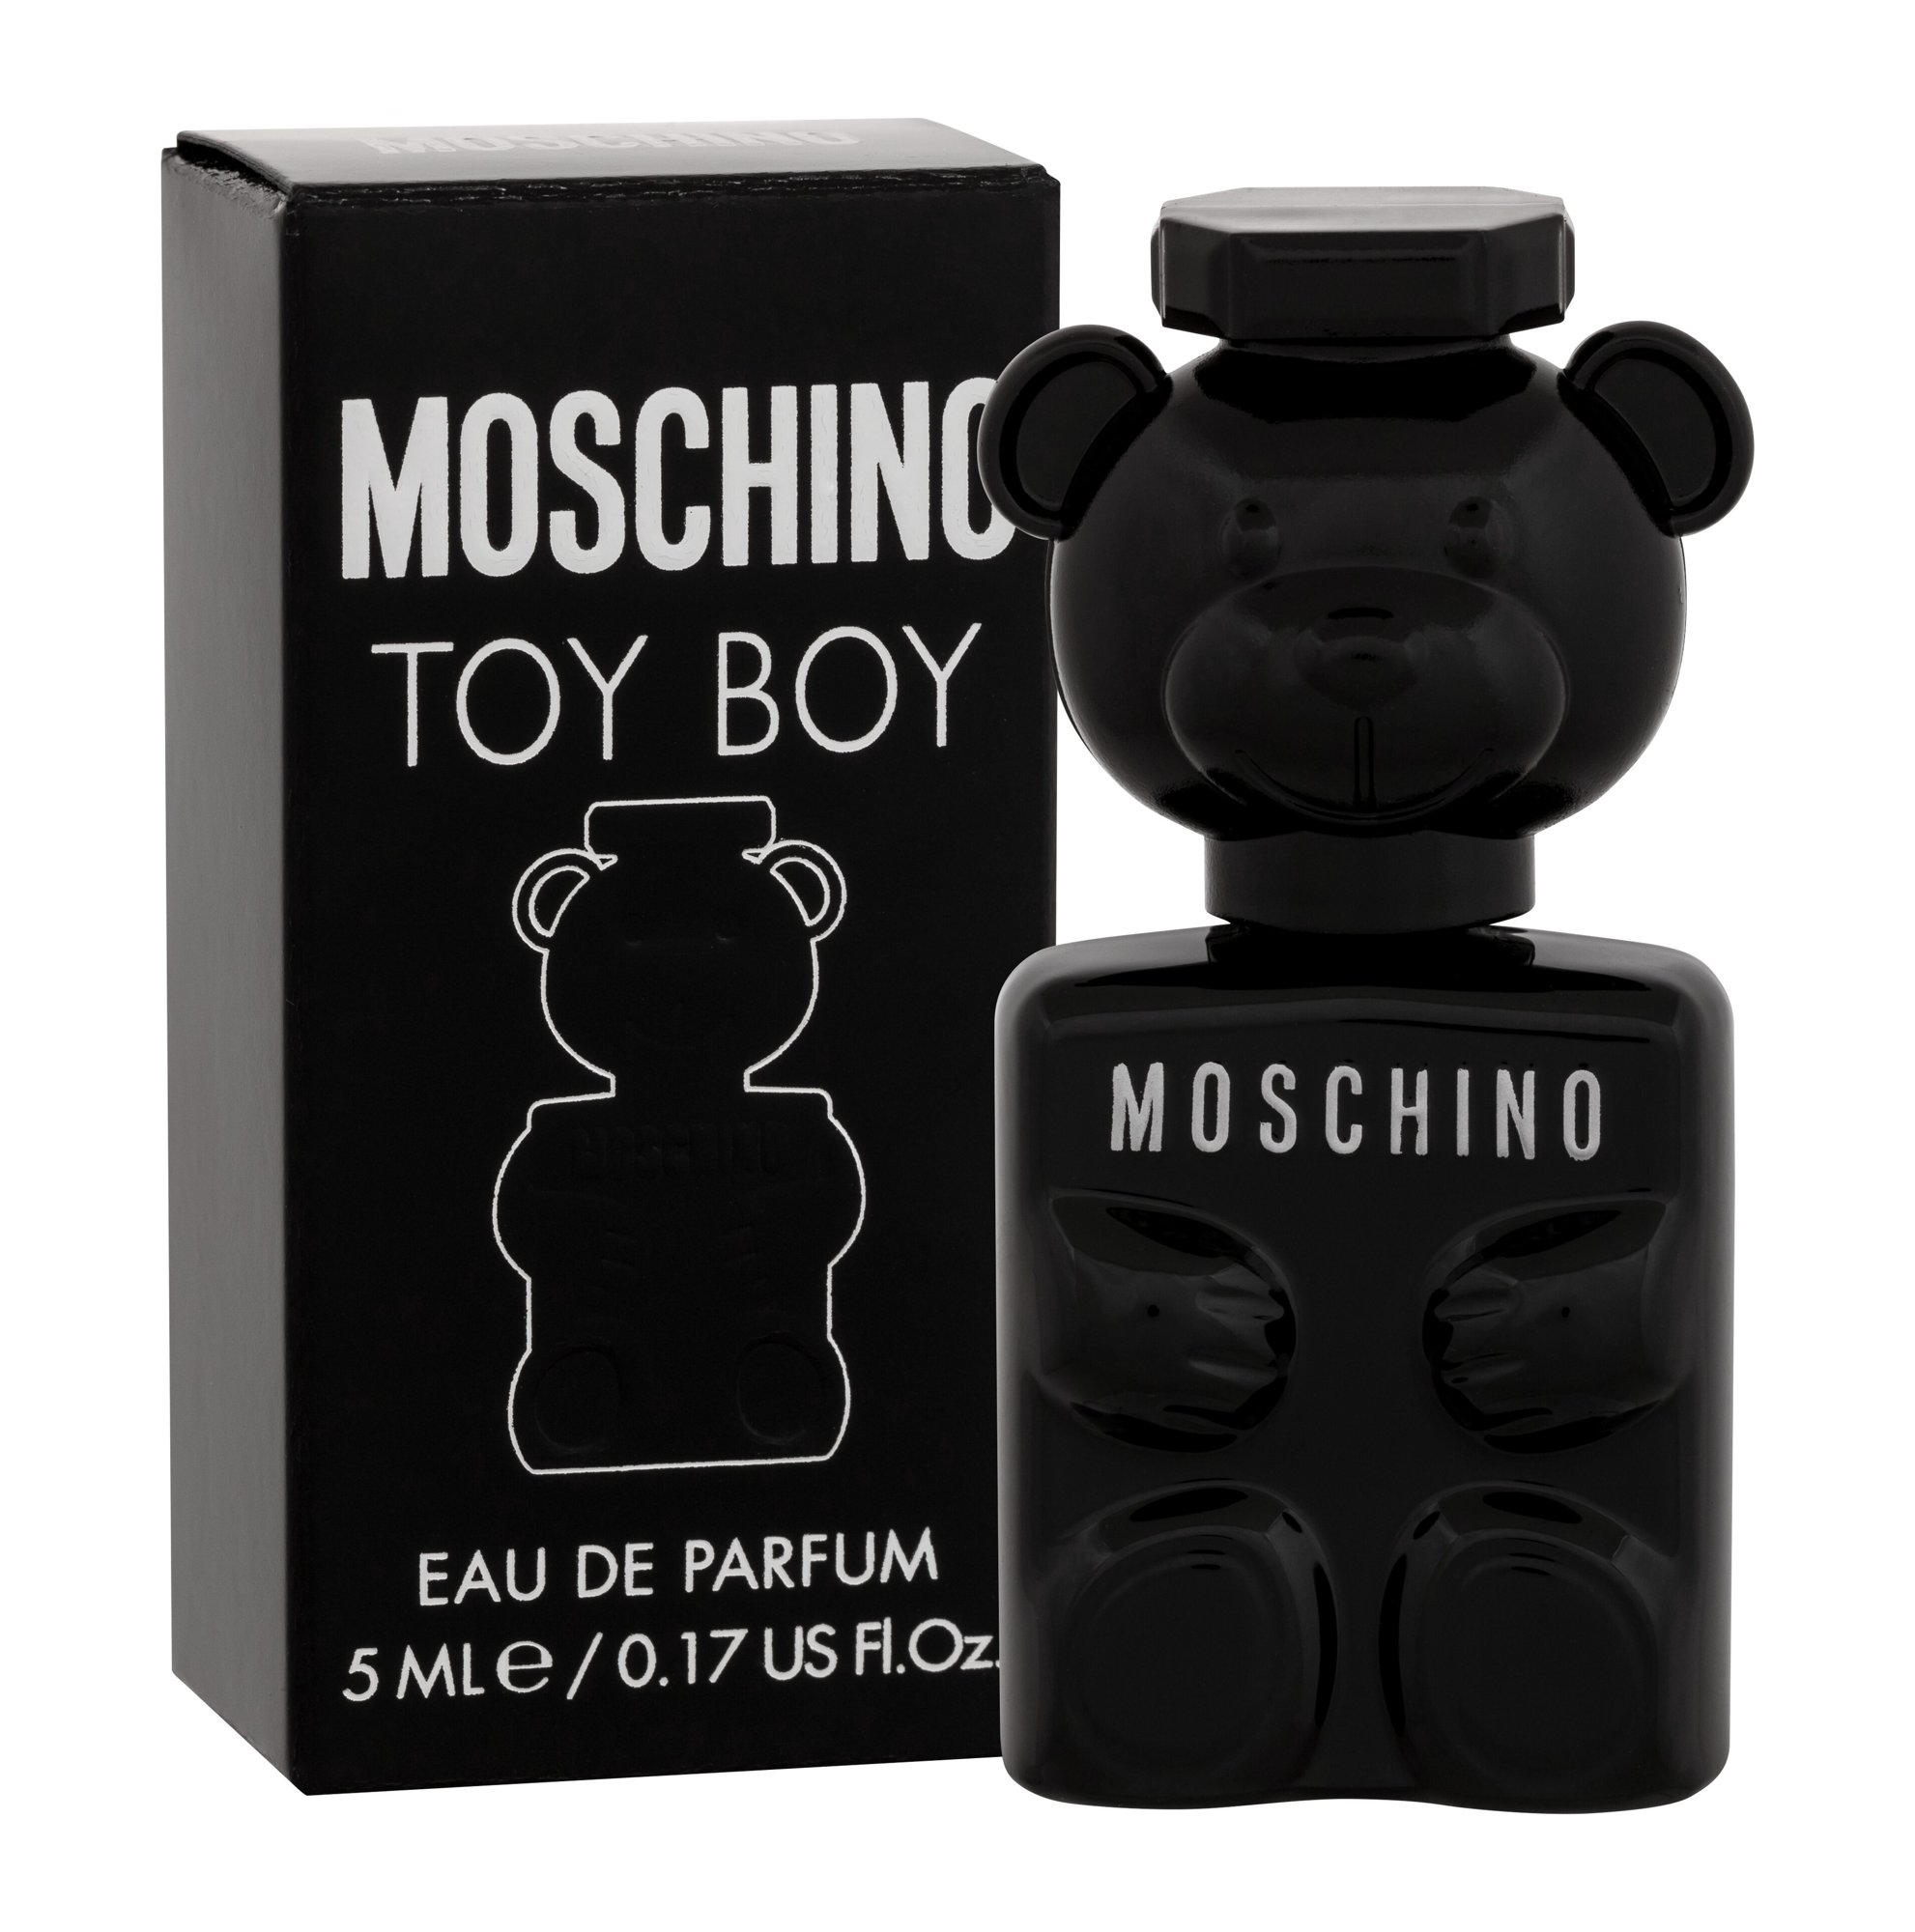 Moschino Toy Boy, edp 5ml